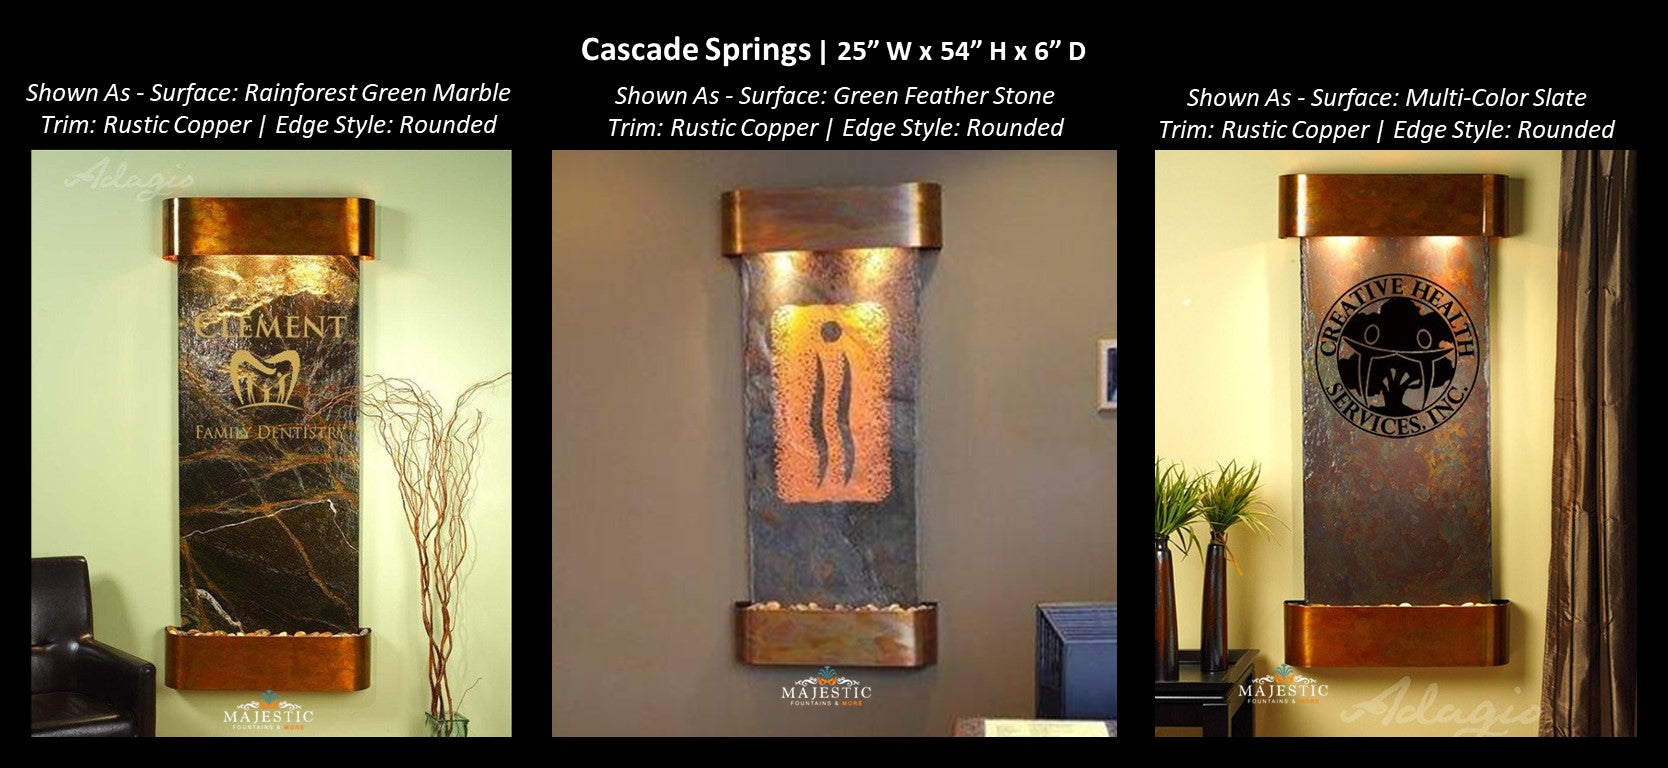 Adagio Cascade Springs - Indoor Wall Fountain - Majestic Fountains & More